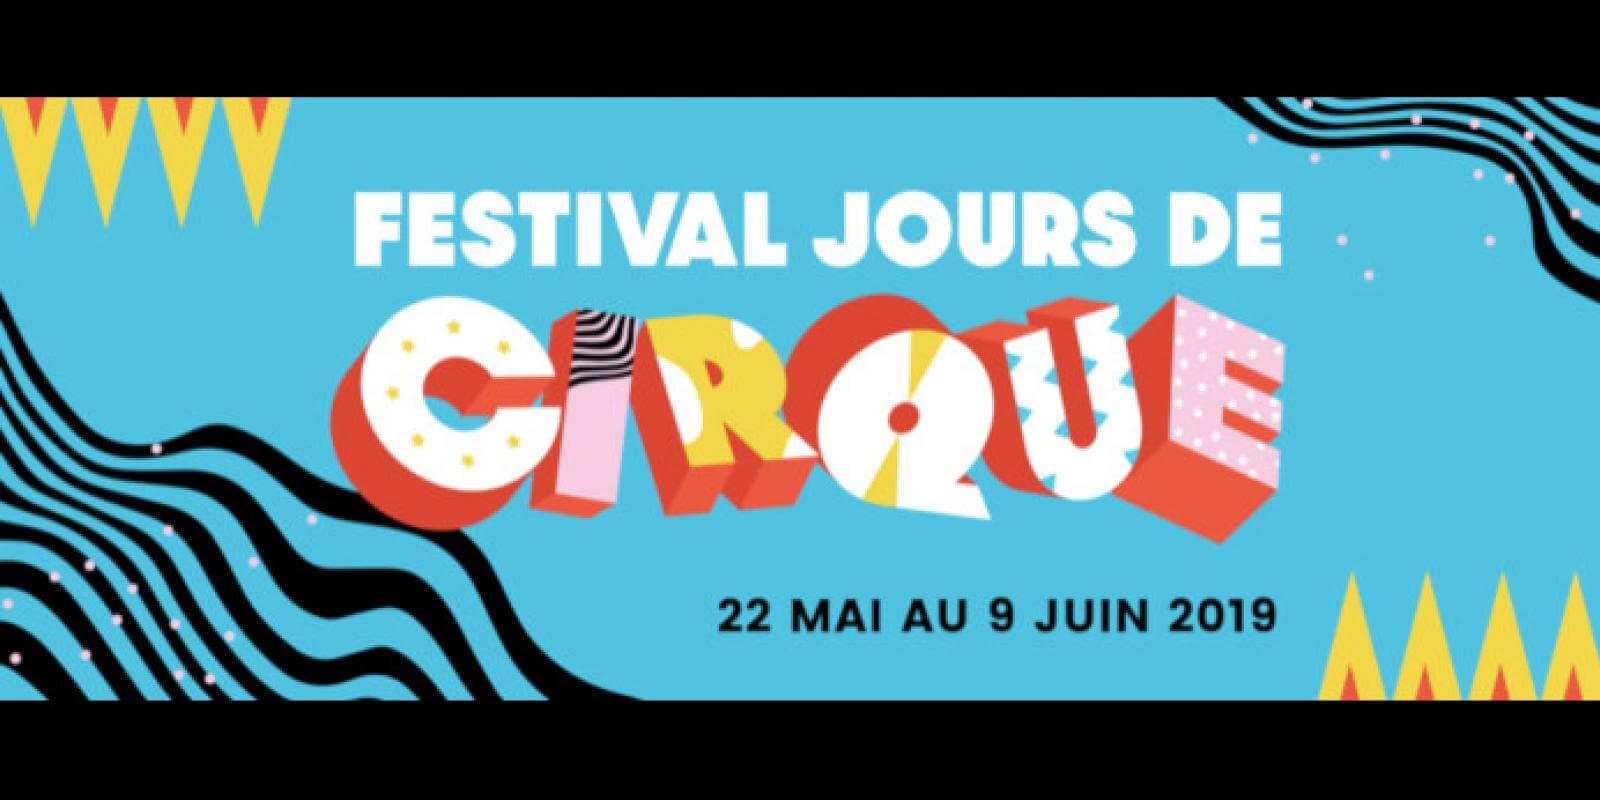 Festival Jours de Cirque | Events in Québec City